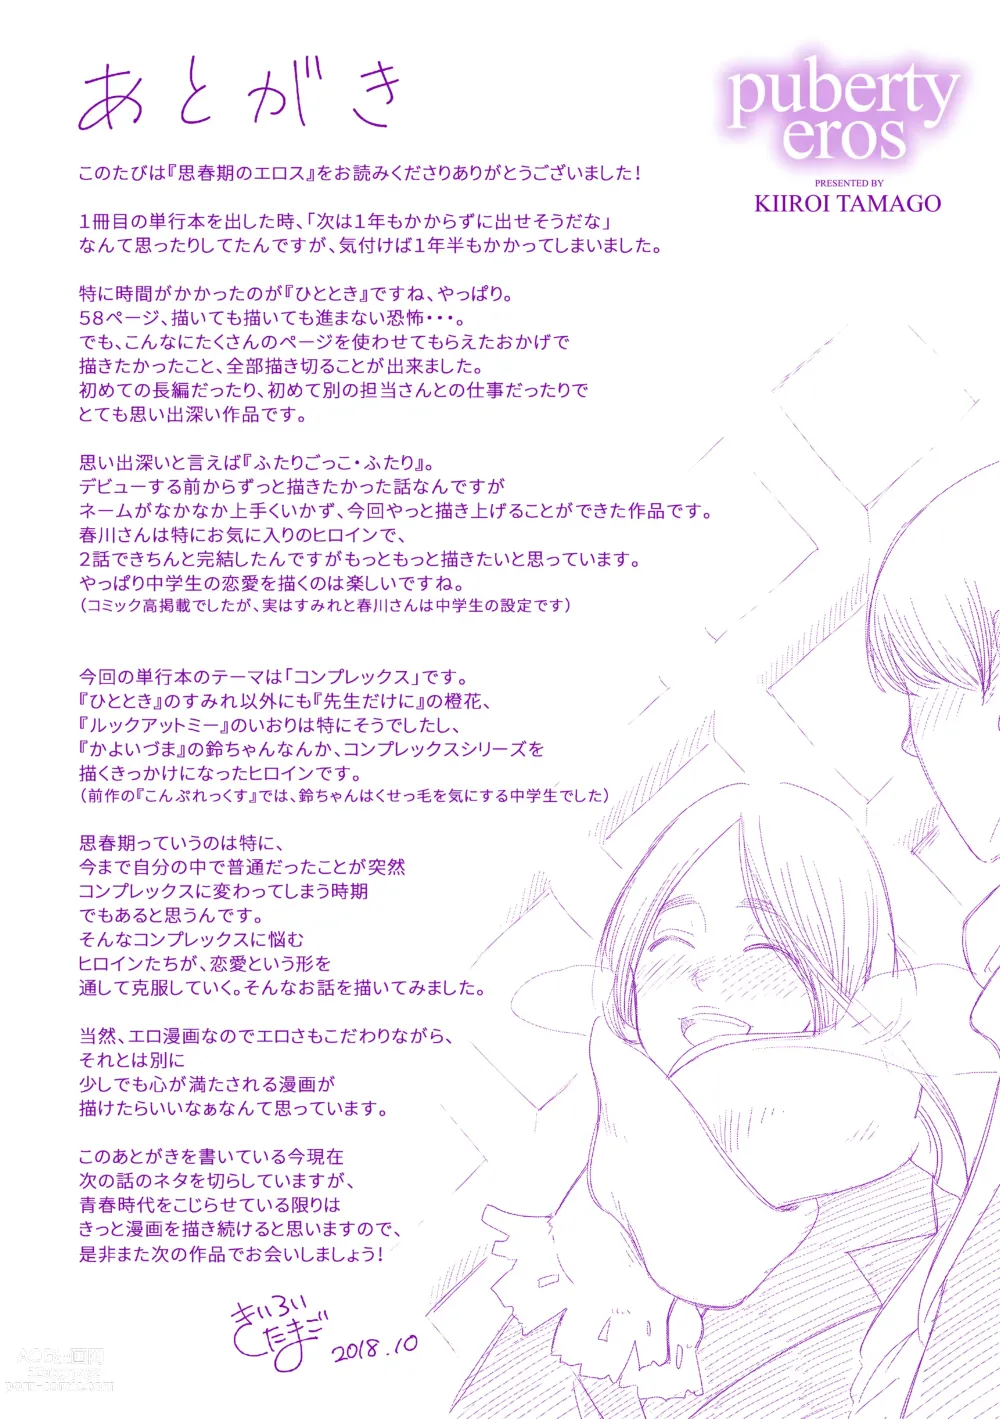 Page 181 of manga Shishunki no Eros - puberty eros + DLsite Kounyu Tokuten